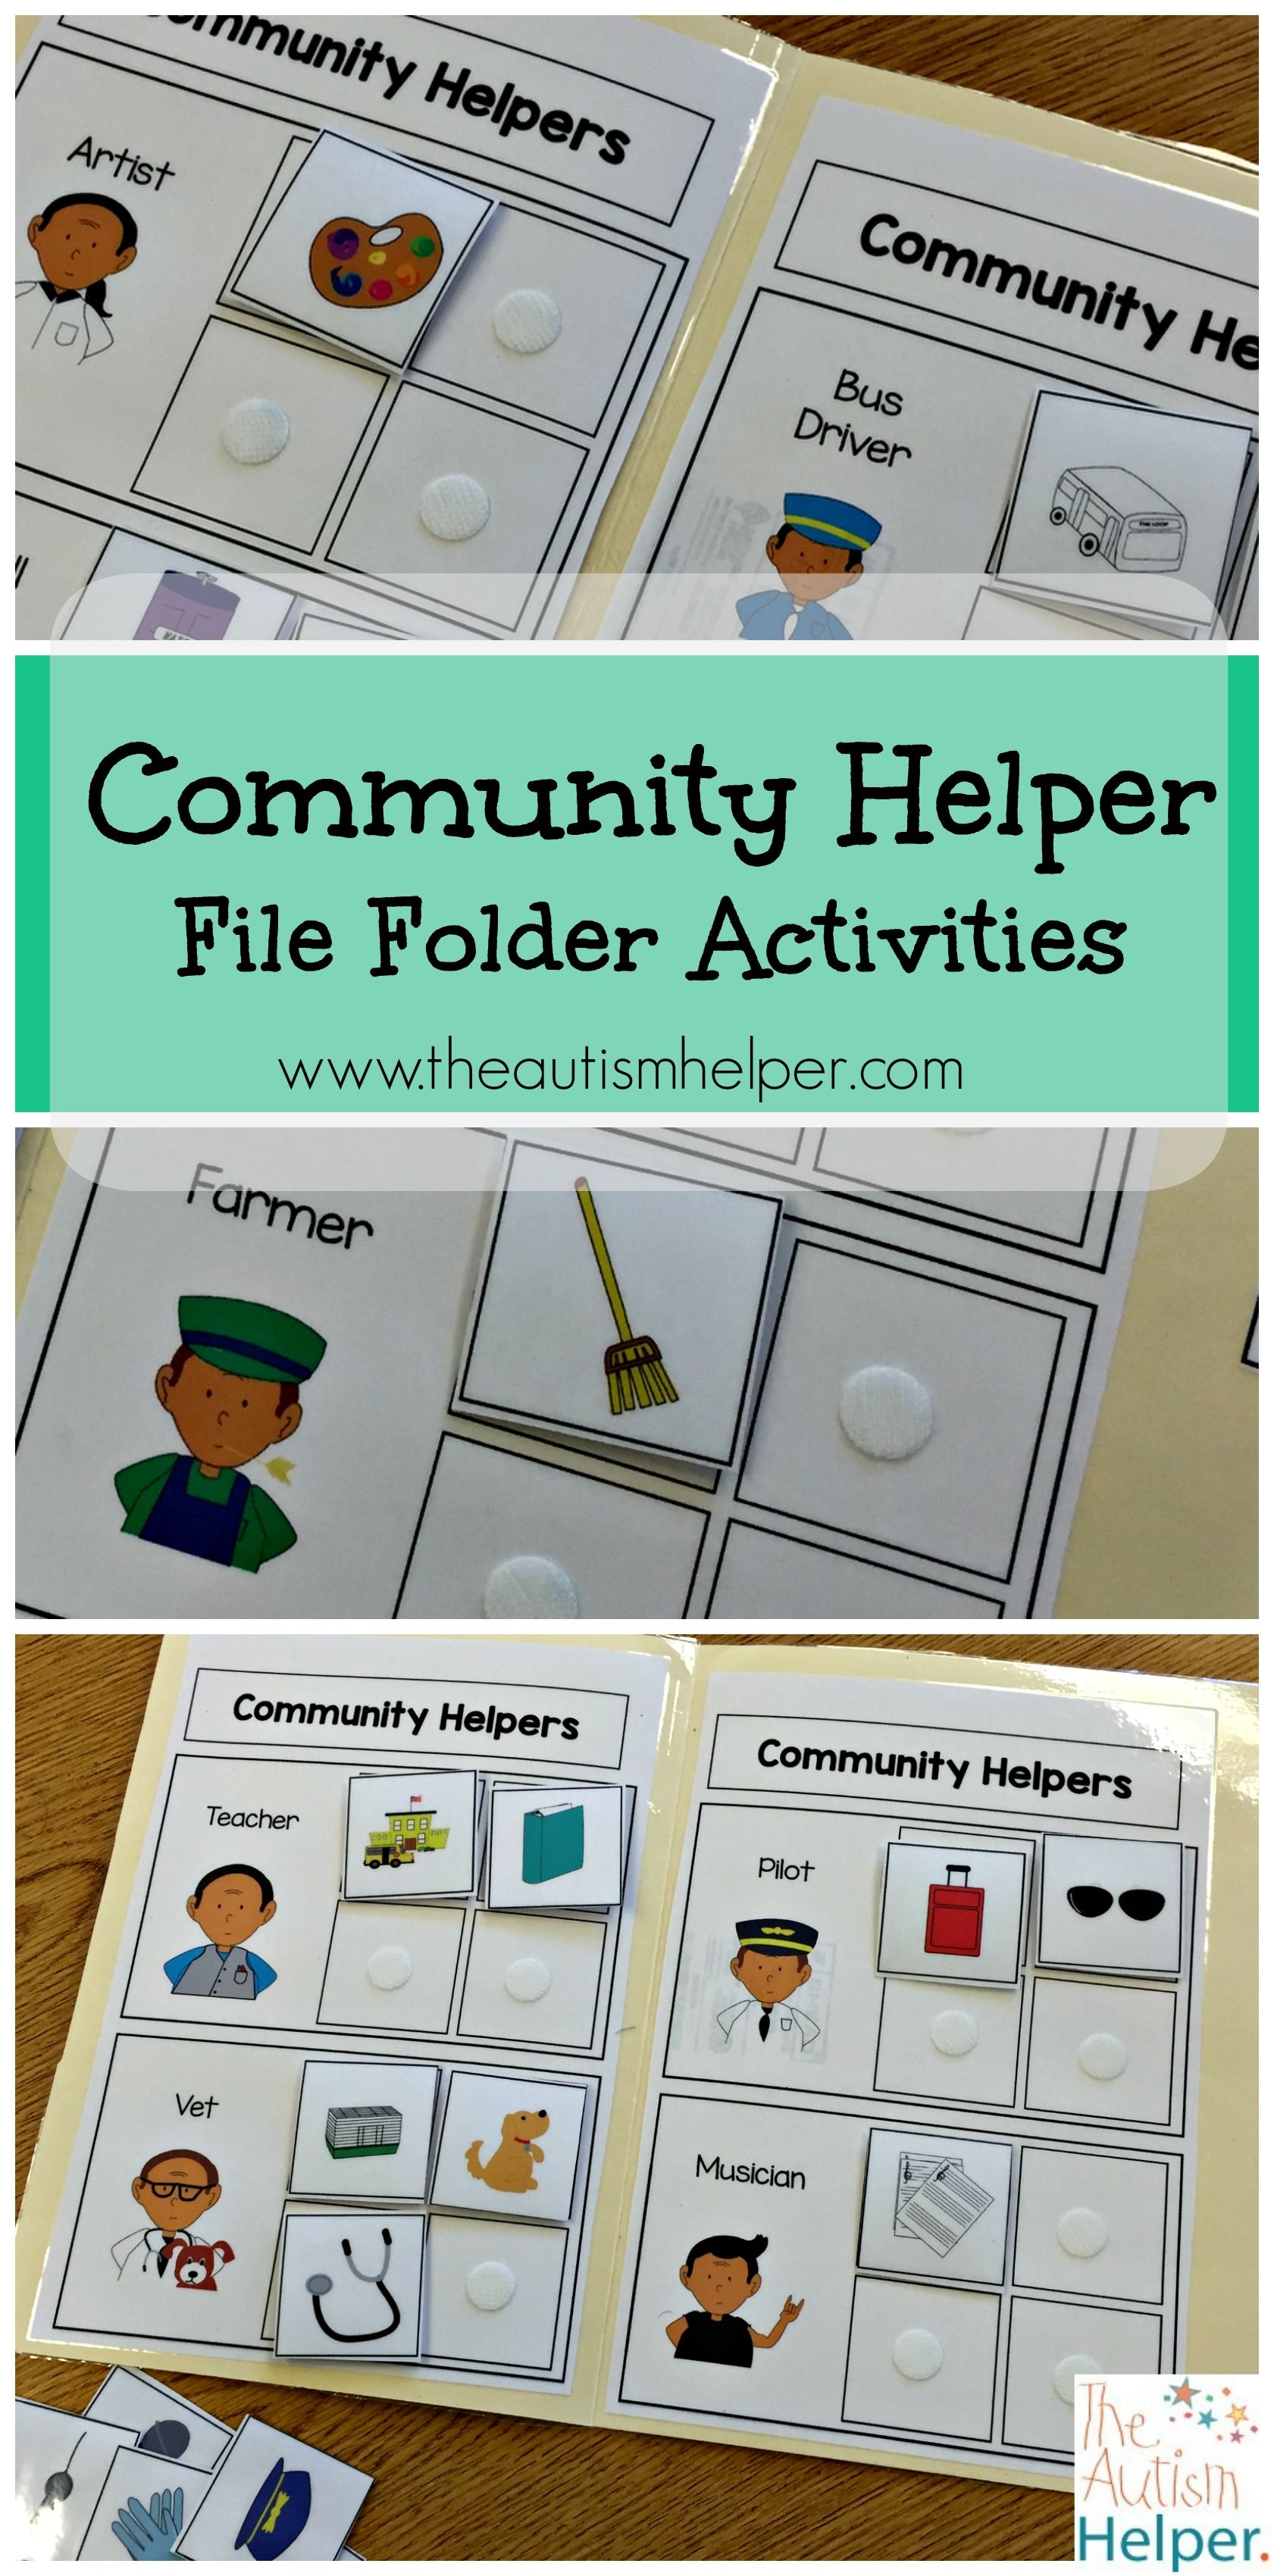 Folder clipart student activity. Community helper file activities